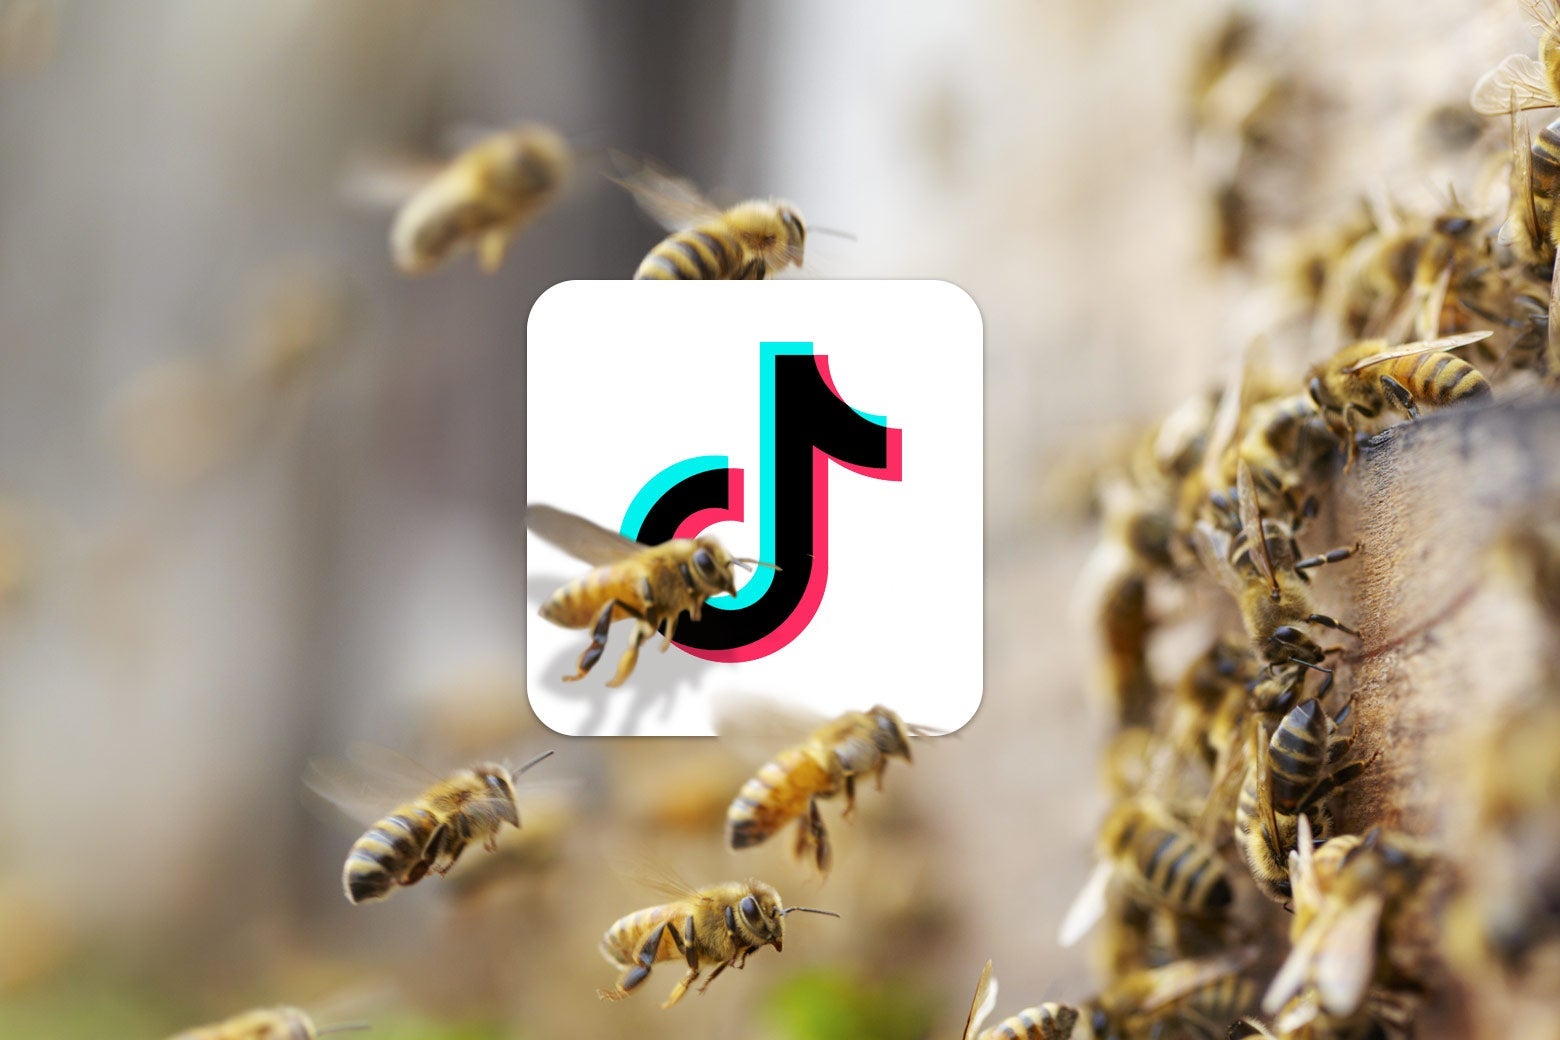 Bees swarm around the TikTok logo.